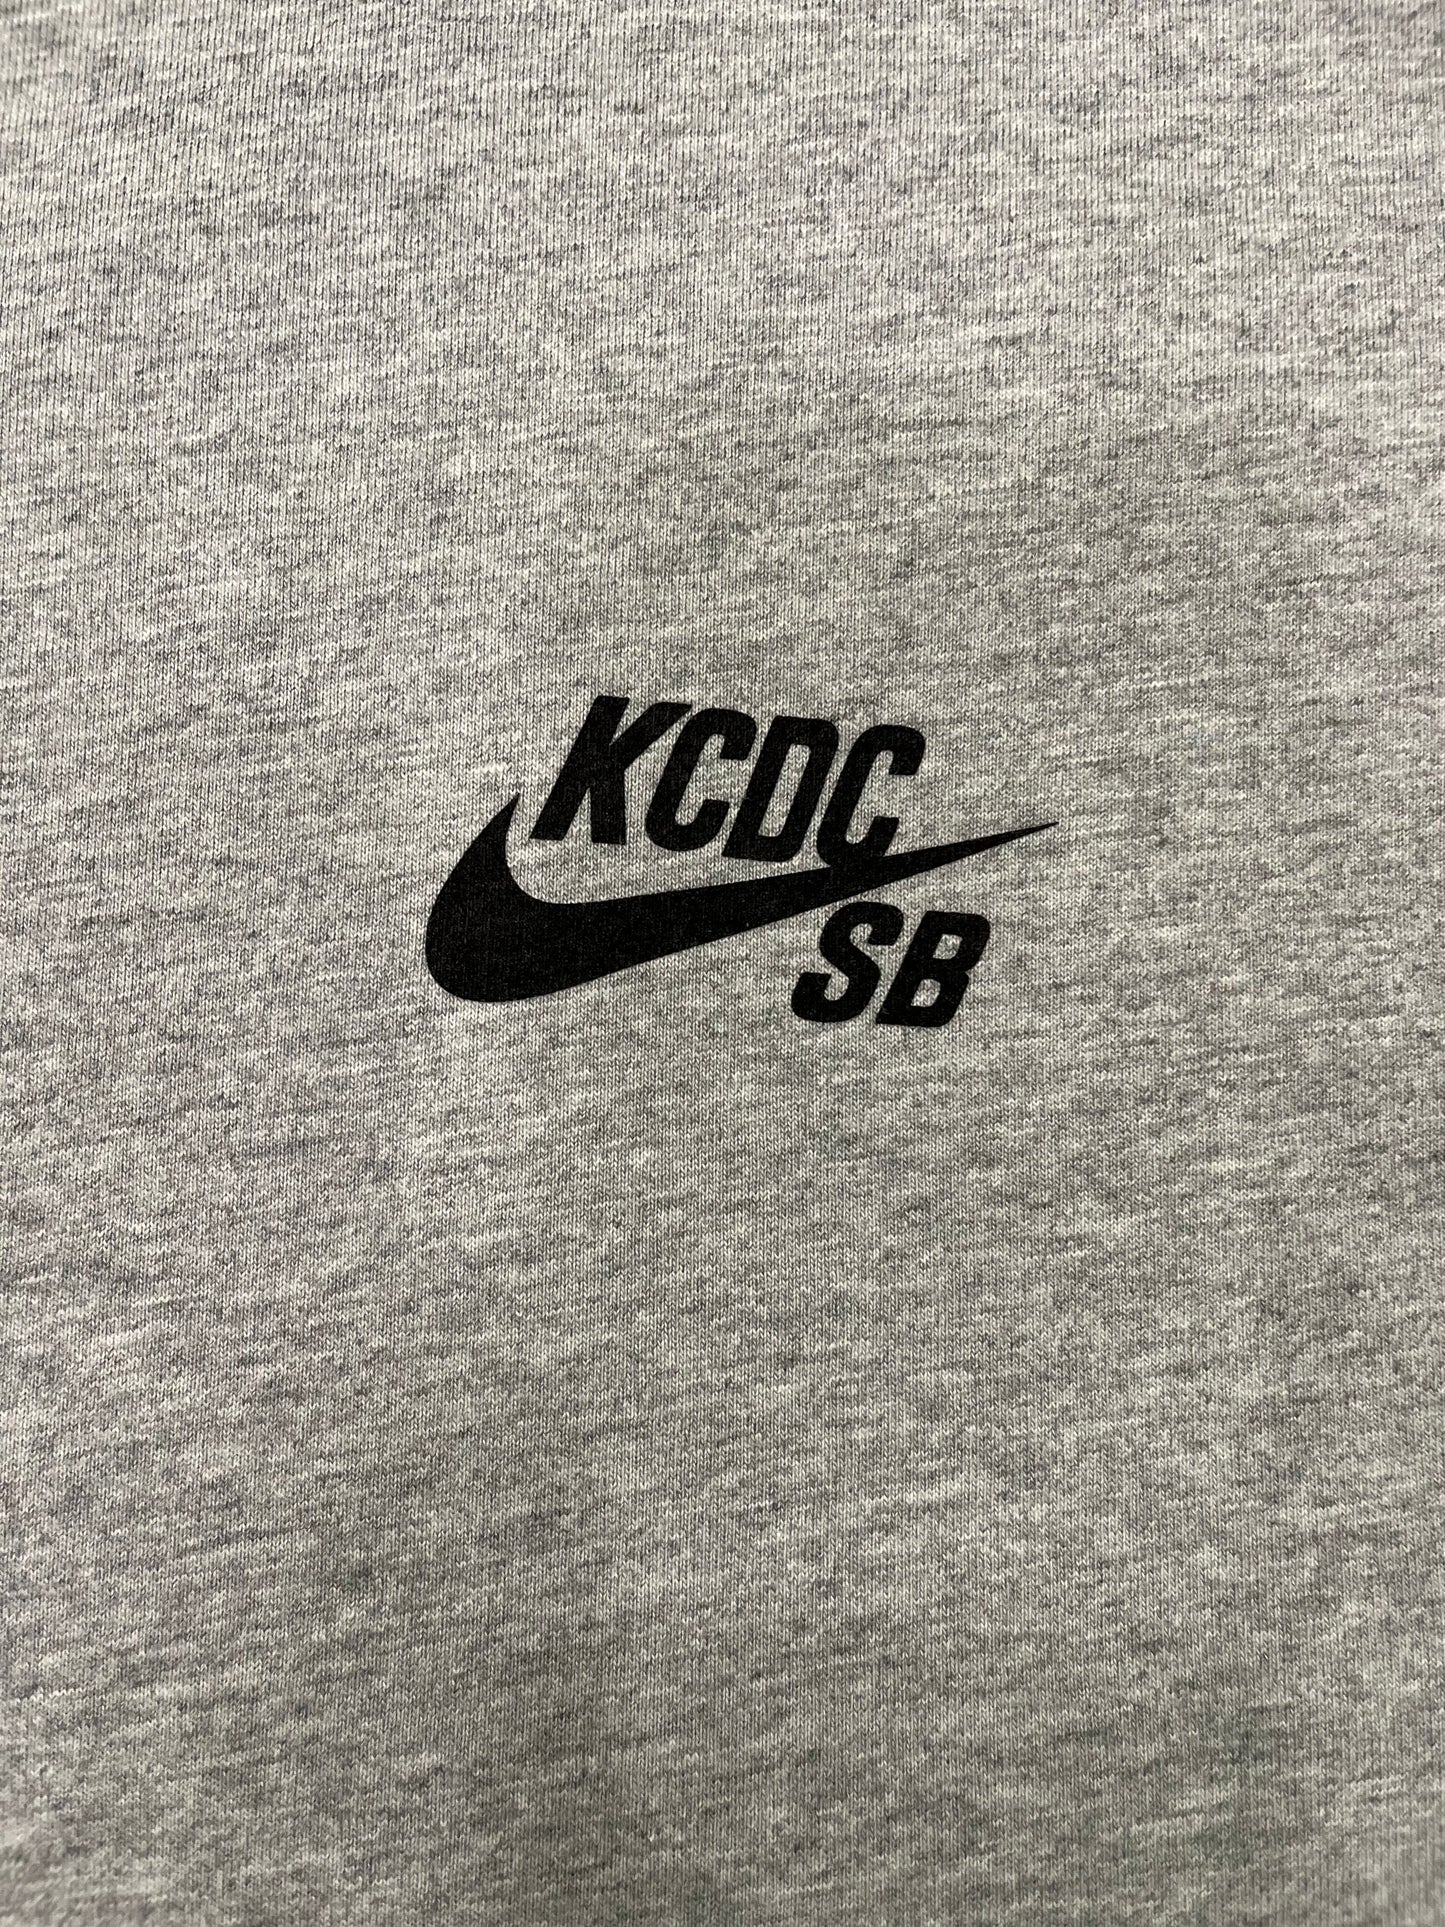 KCDC X Nike SB Bigfoot Tee Grey, T-Shirt - Paroissesaintefoy Sneakers Sale Online